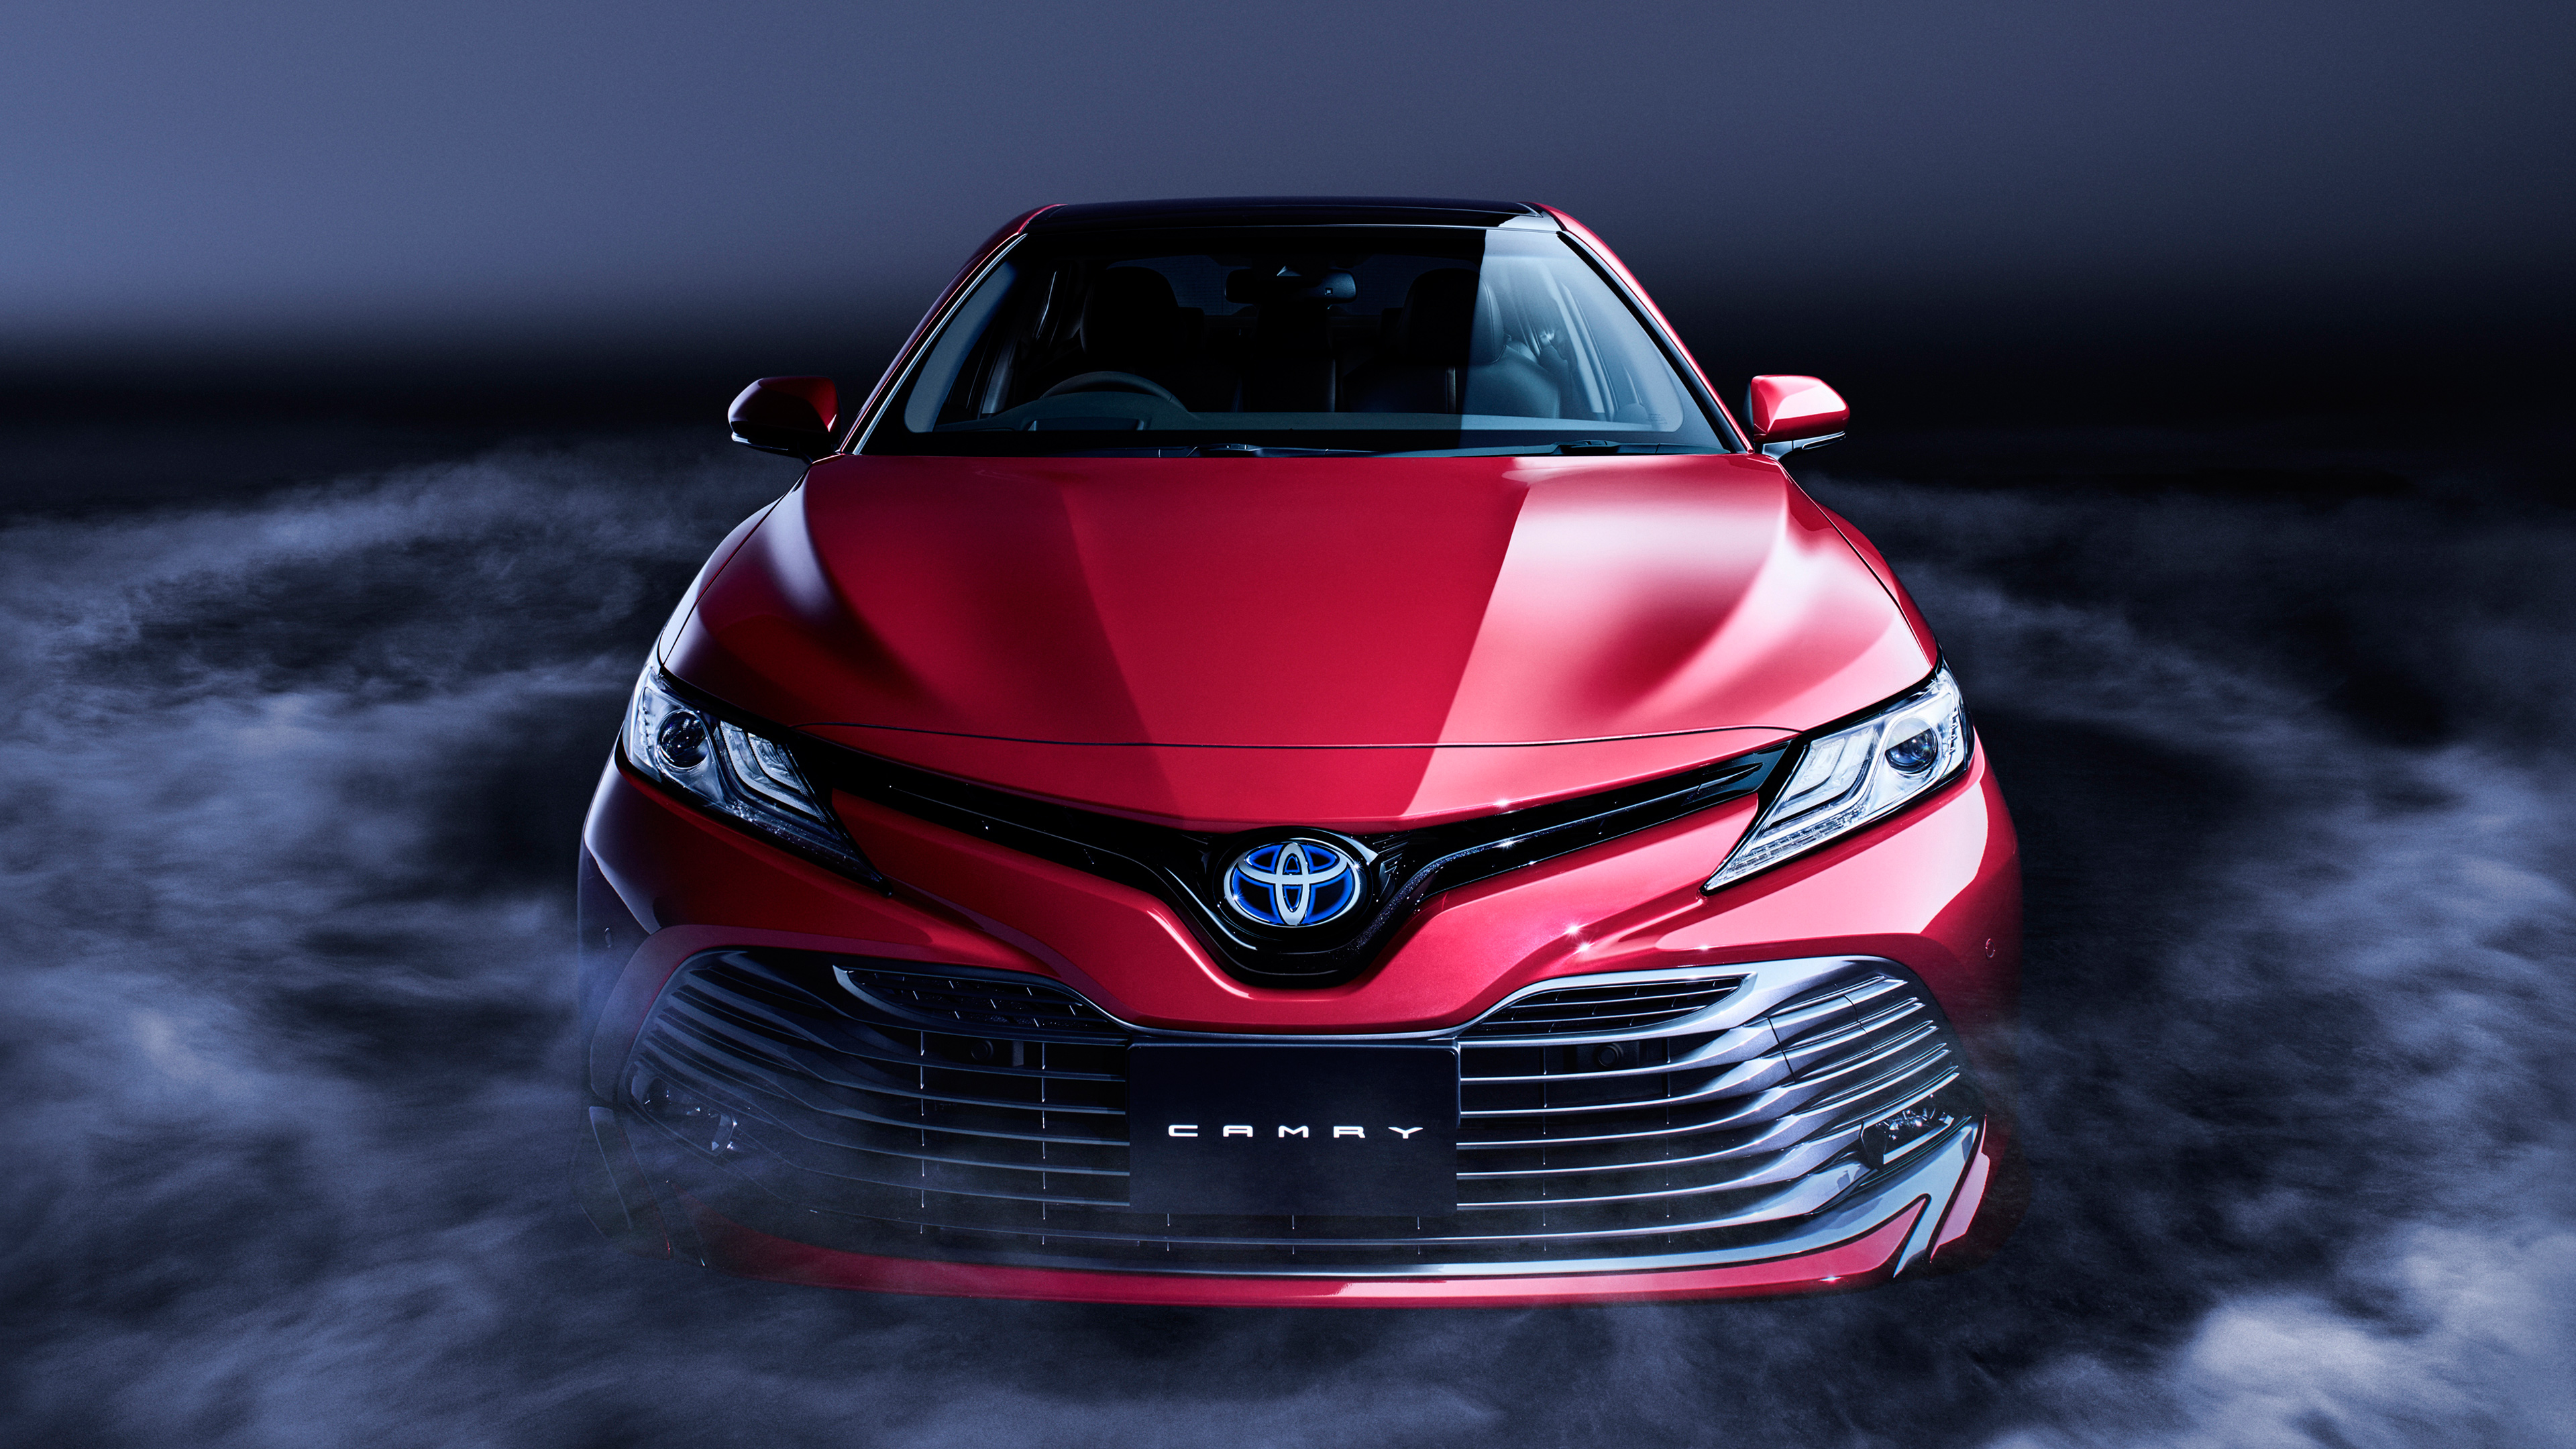 2018 Toyota Camry Hybrid 4K Wallpaper | HD Car Wallpapers | ID #7933
